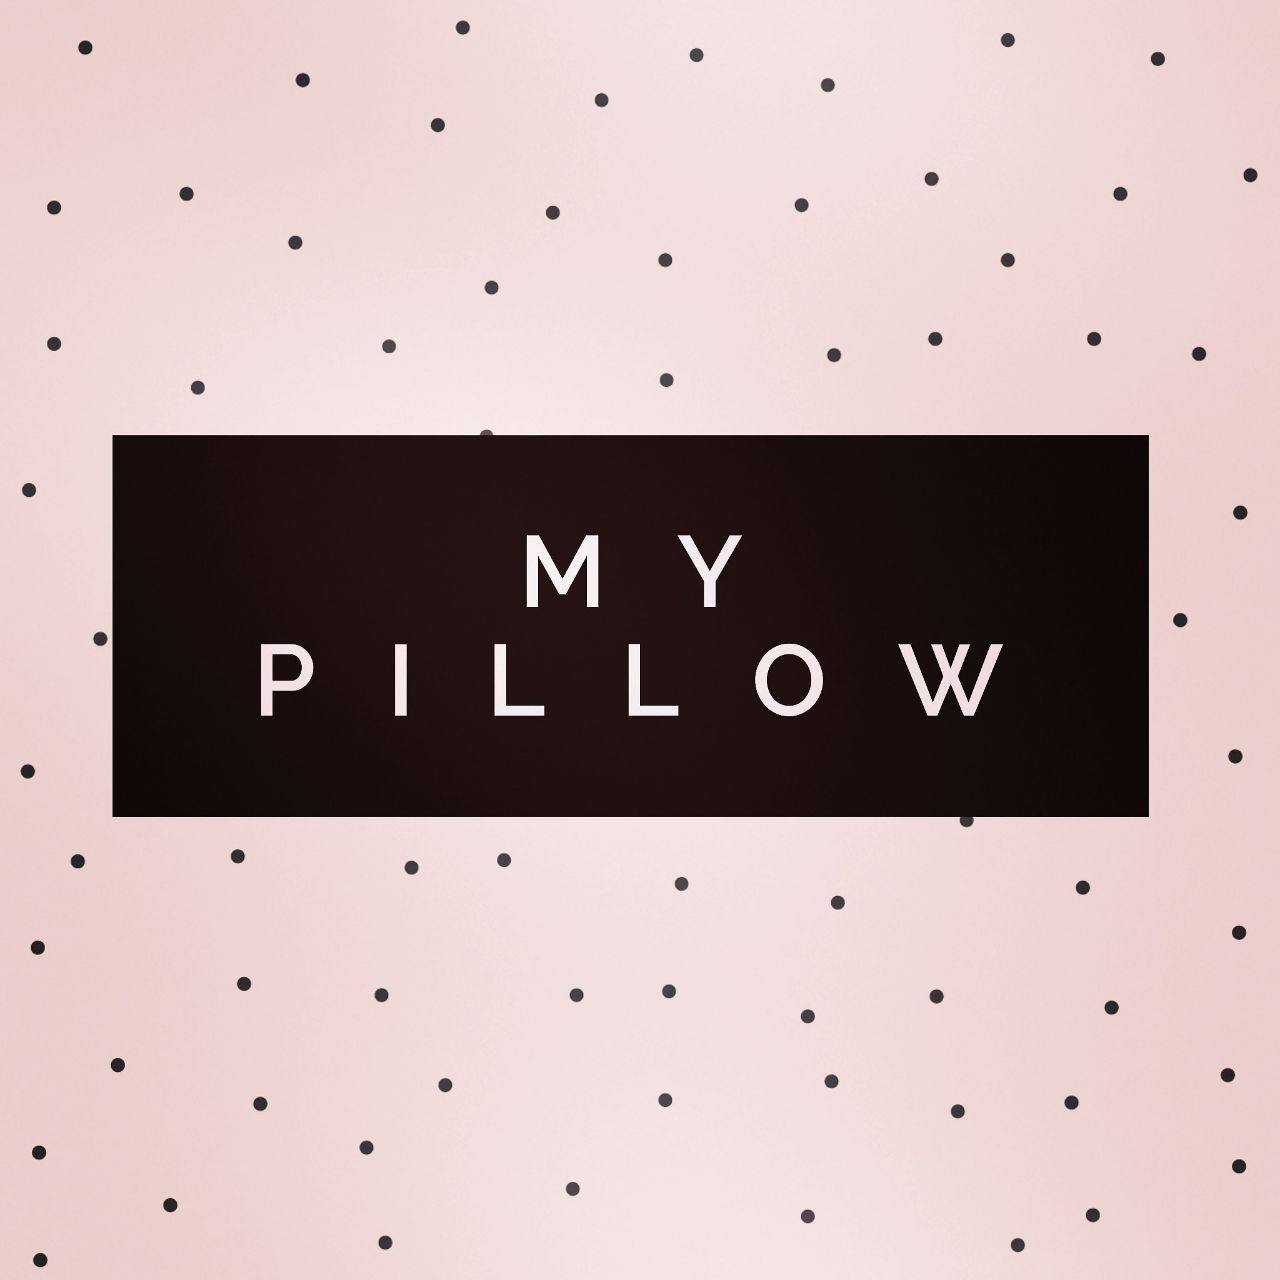 My pillow